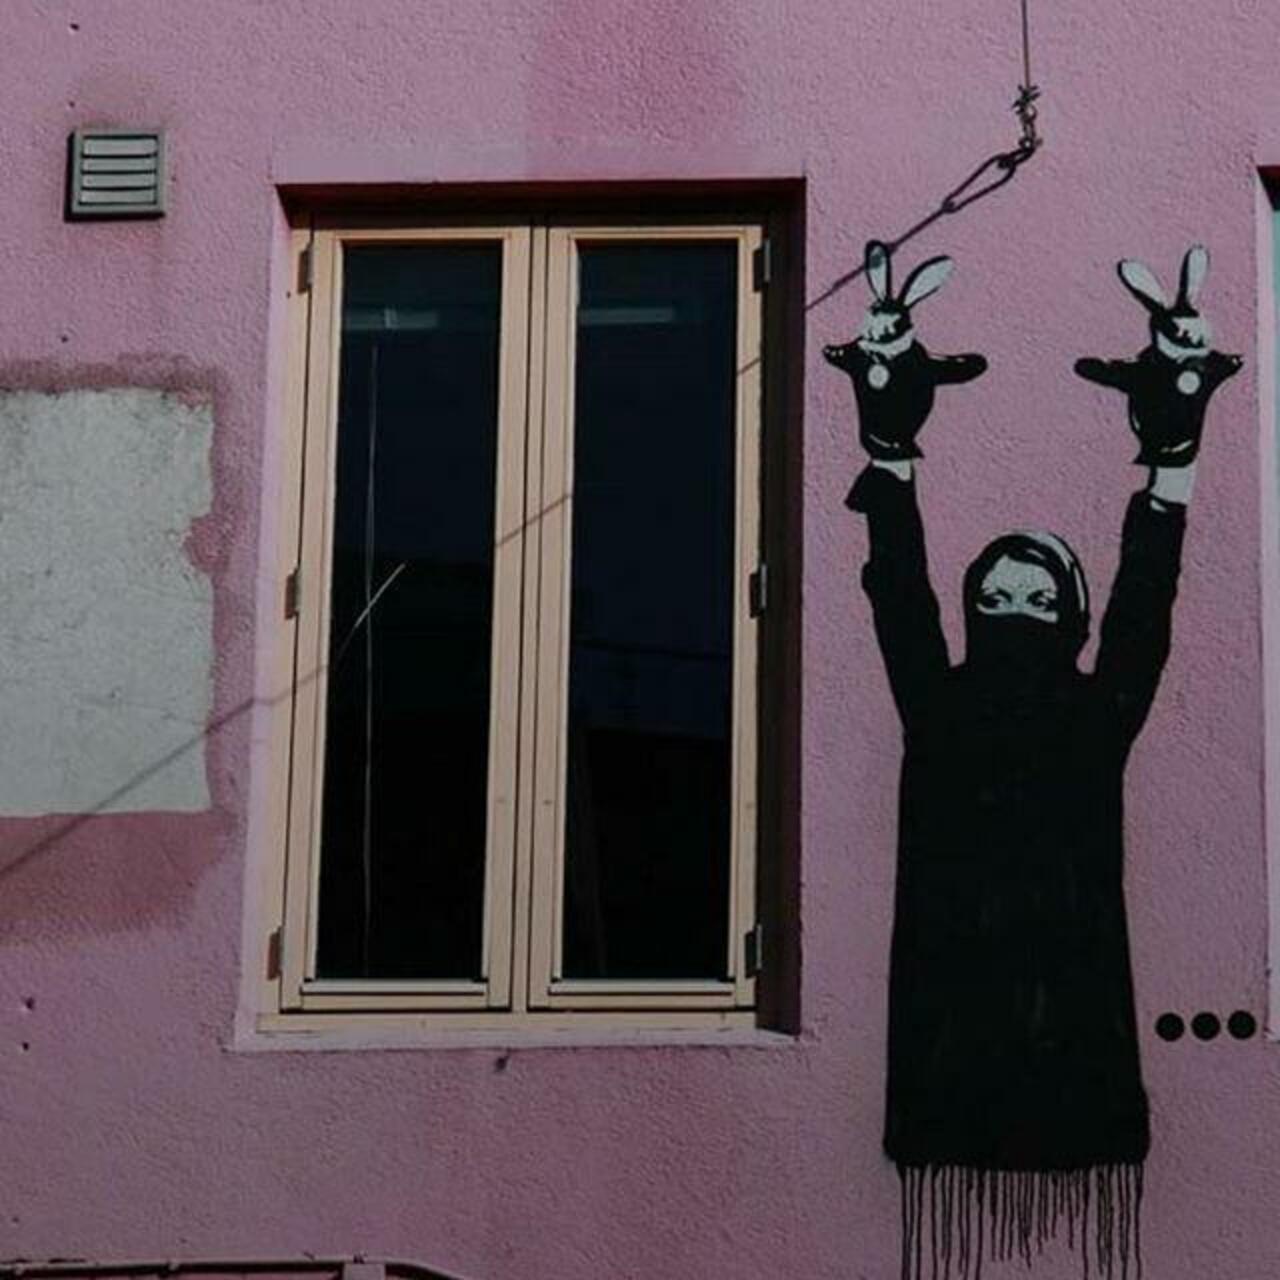 RT @weigeltw: By #dotdotdot #jaimerojo
#protestor
#mural #streetart #graffiti #urbanart http://t.co/kXkb6sQF4p